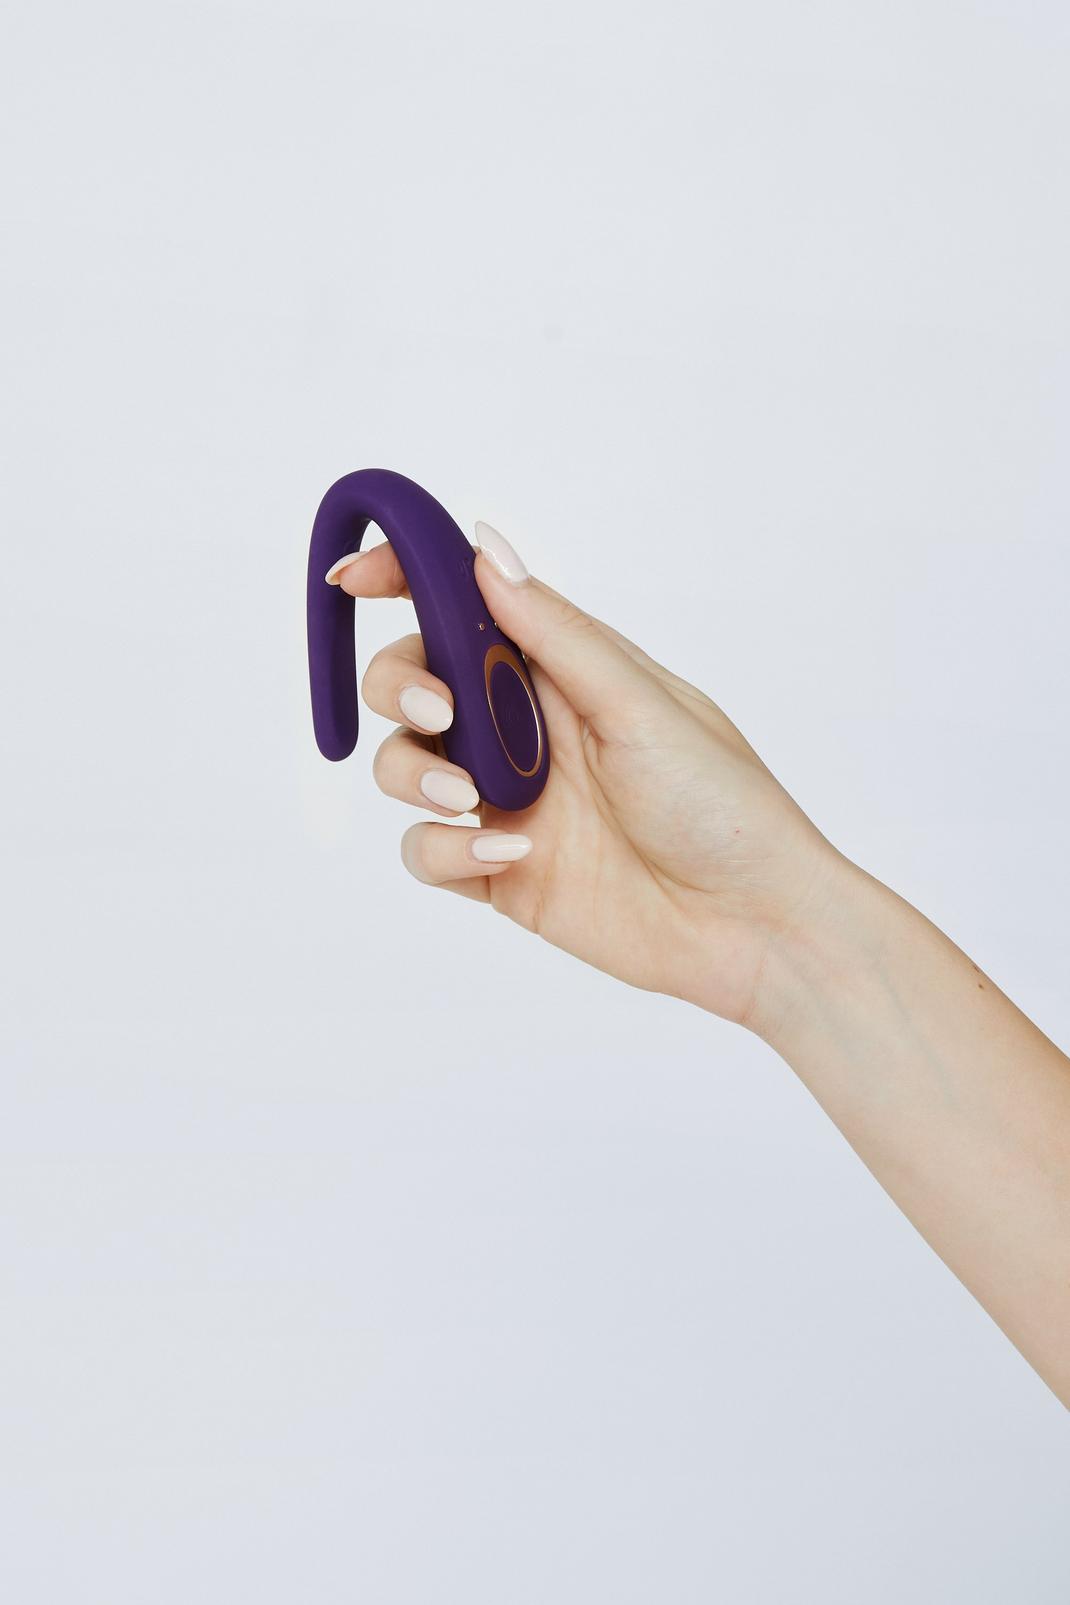 Vibromasseur rechargeable - Partner Toy, Purple image number 1